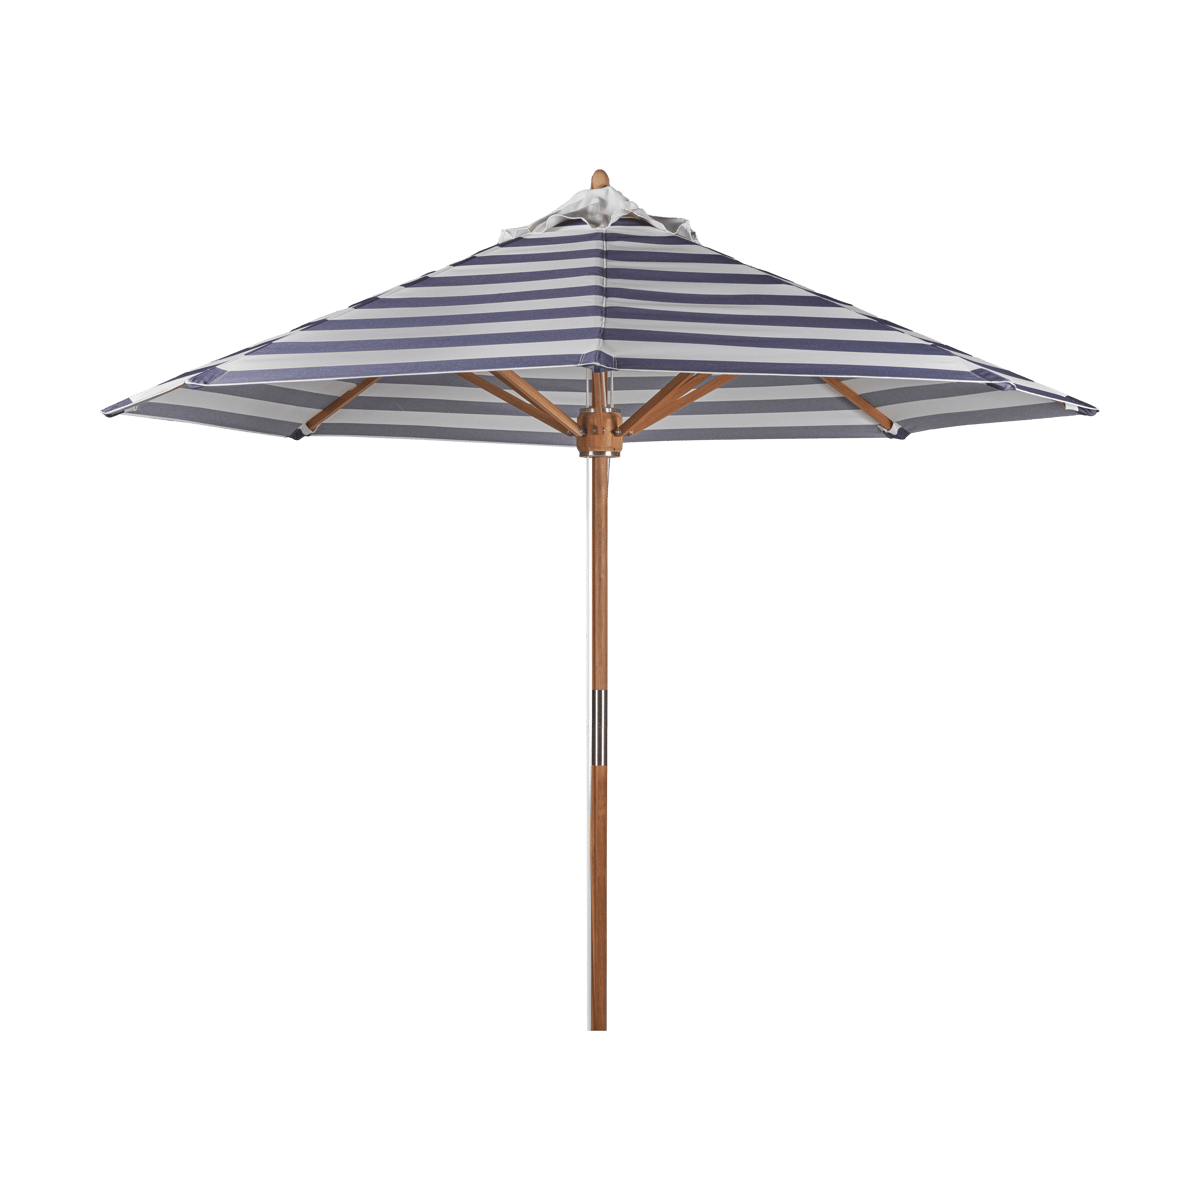 1898 Hisshult parasol Ø270 cm Blue stripe-teak